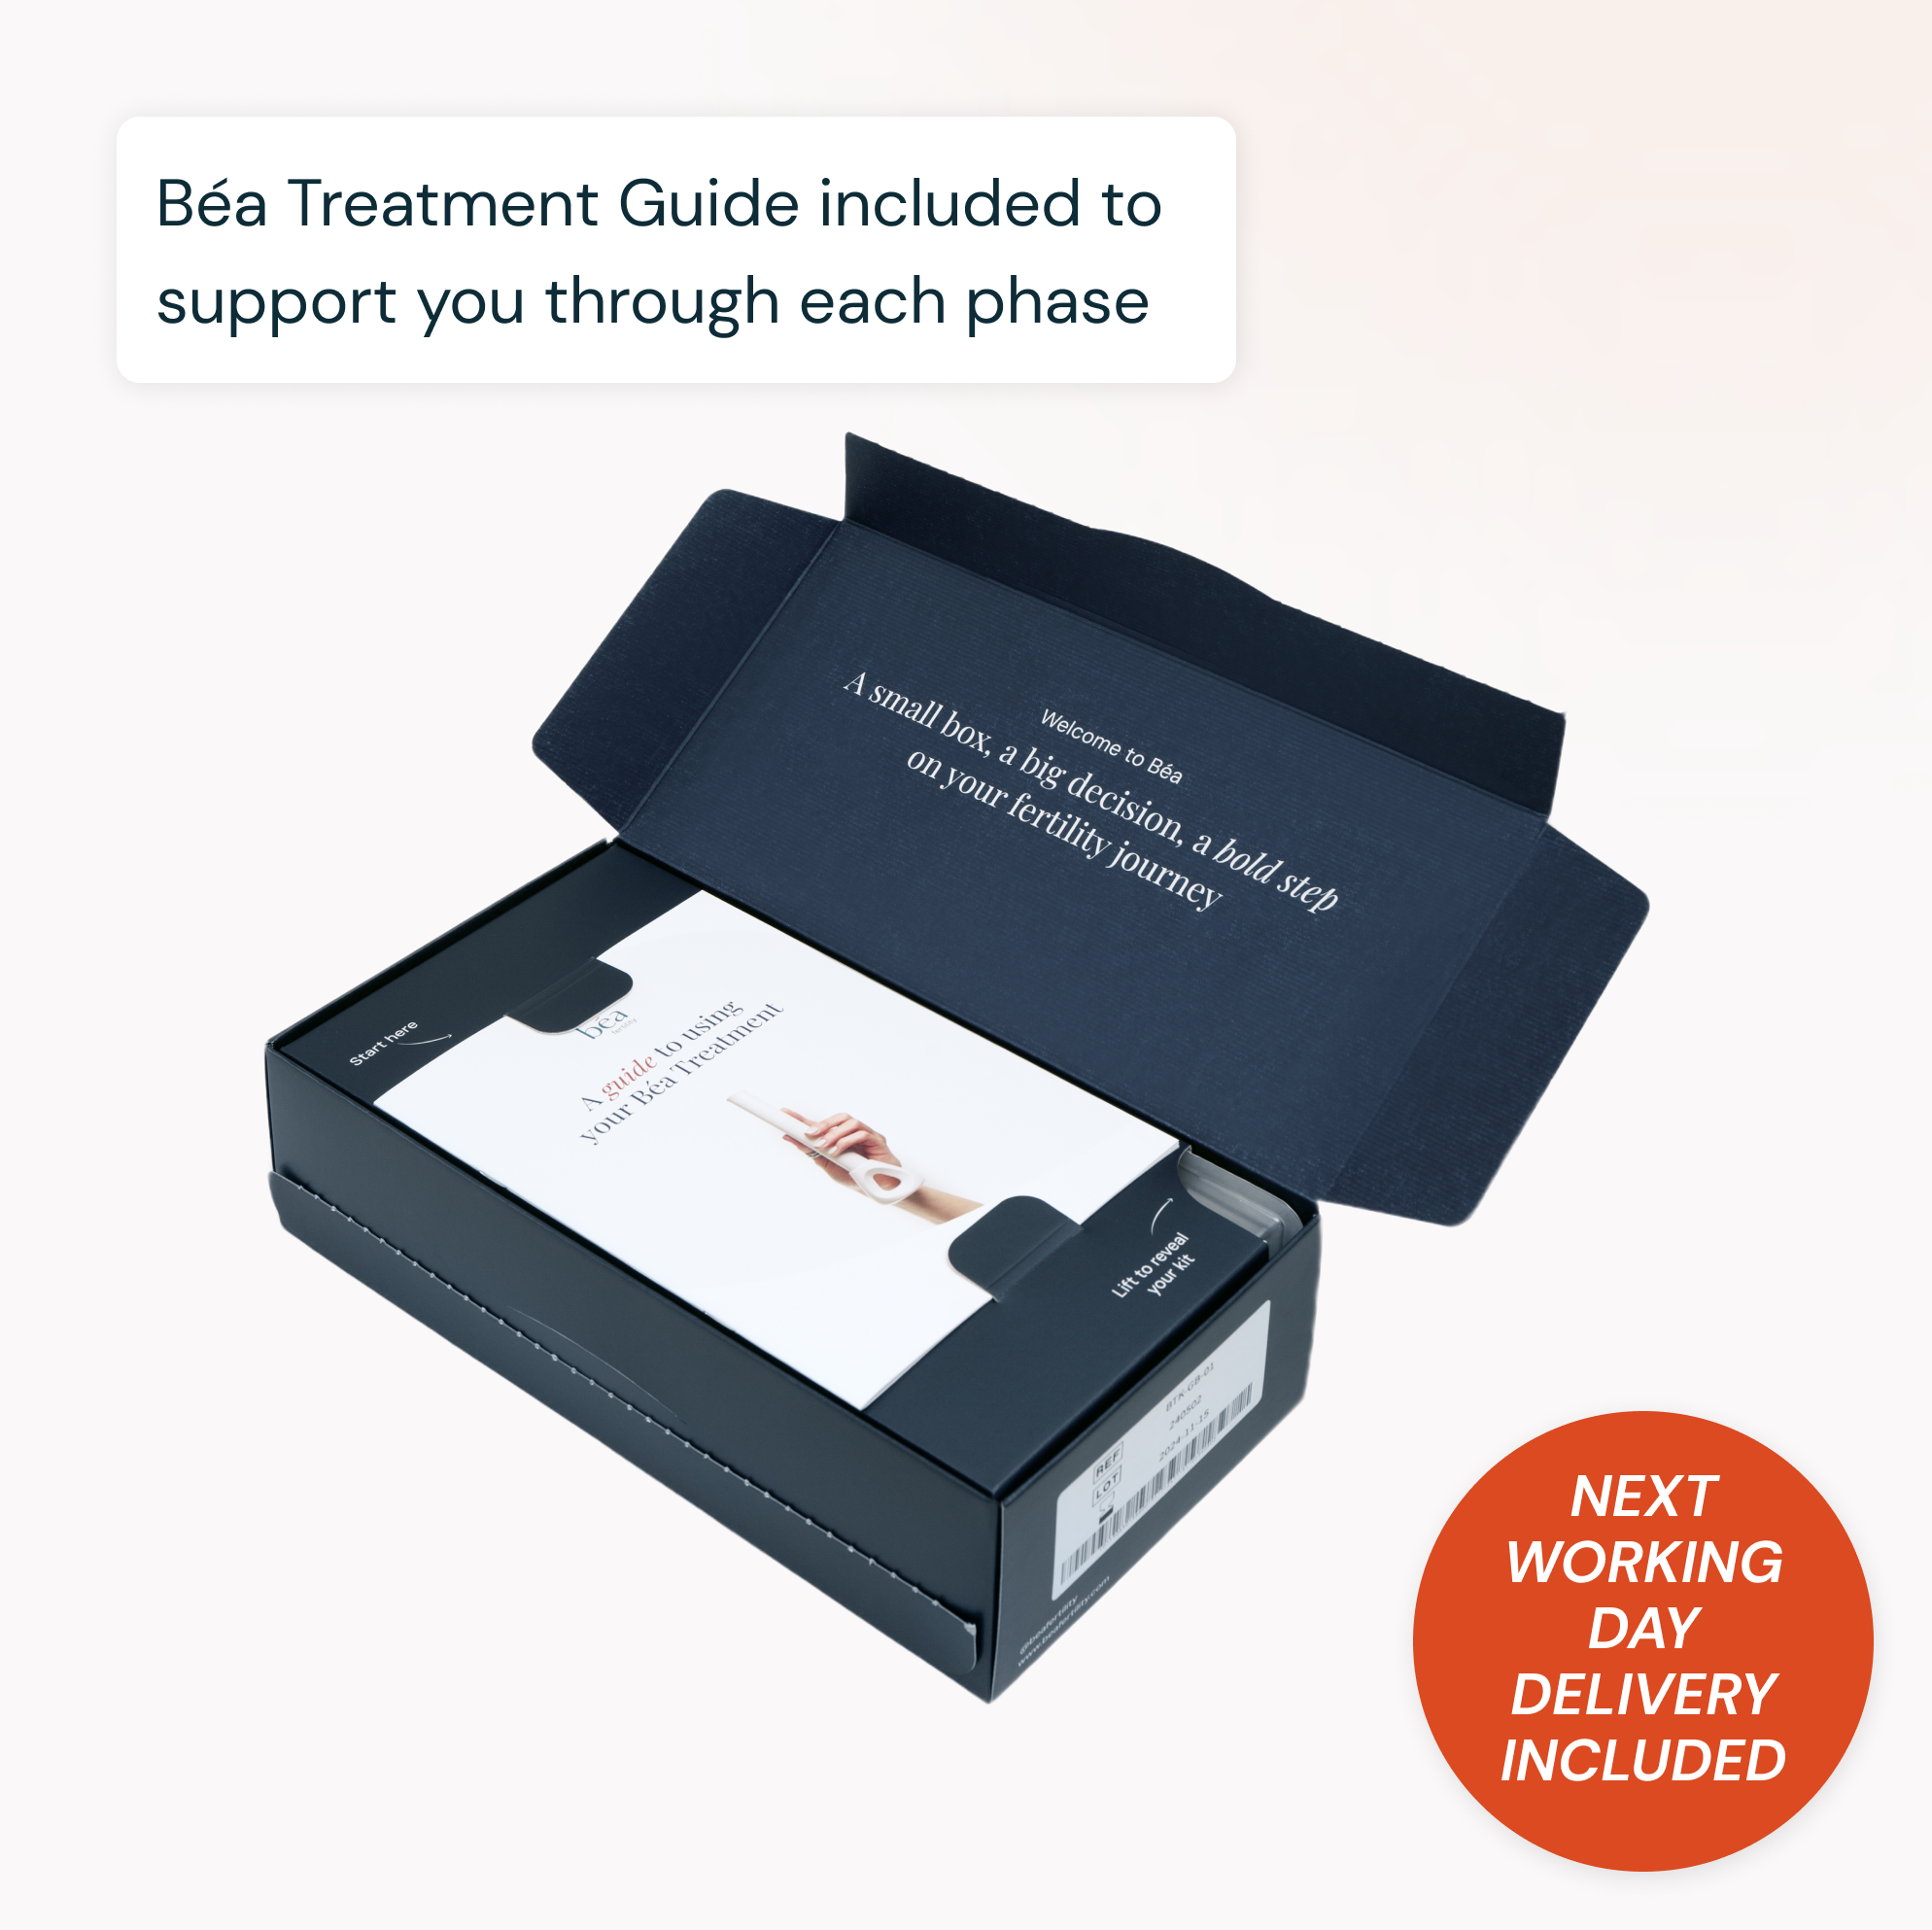 The Béa Treatment Kit